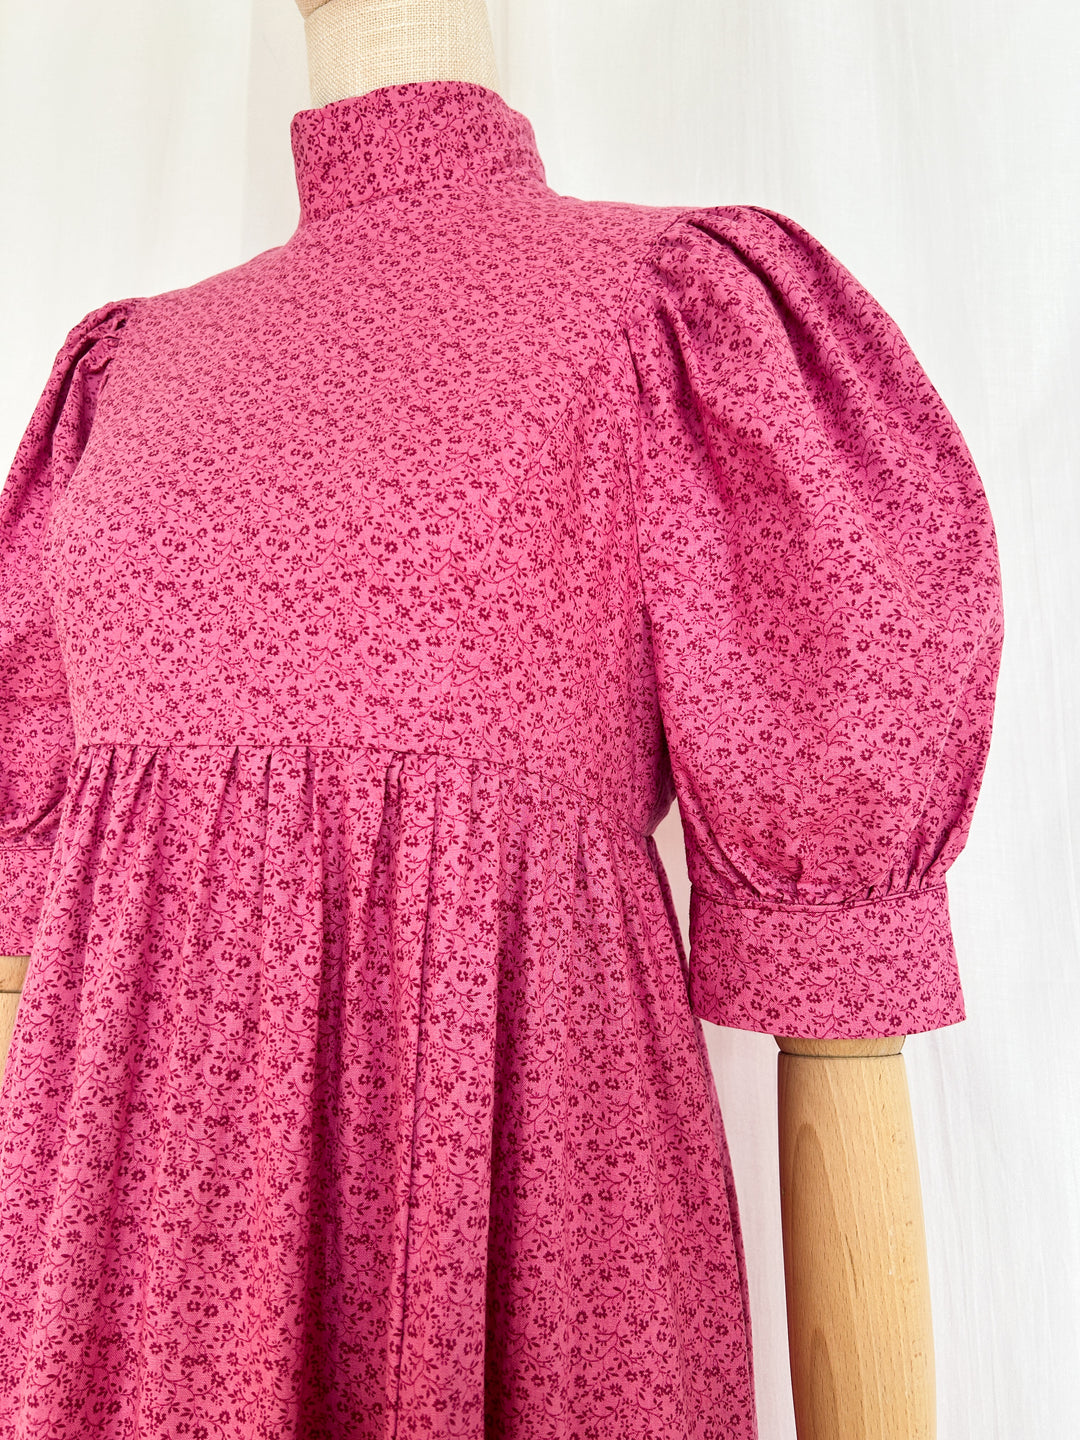 Dreamy Pink Cotton Floral 1970s Puff Sleeve Prairie dress